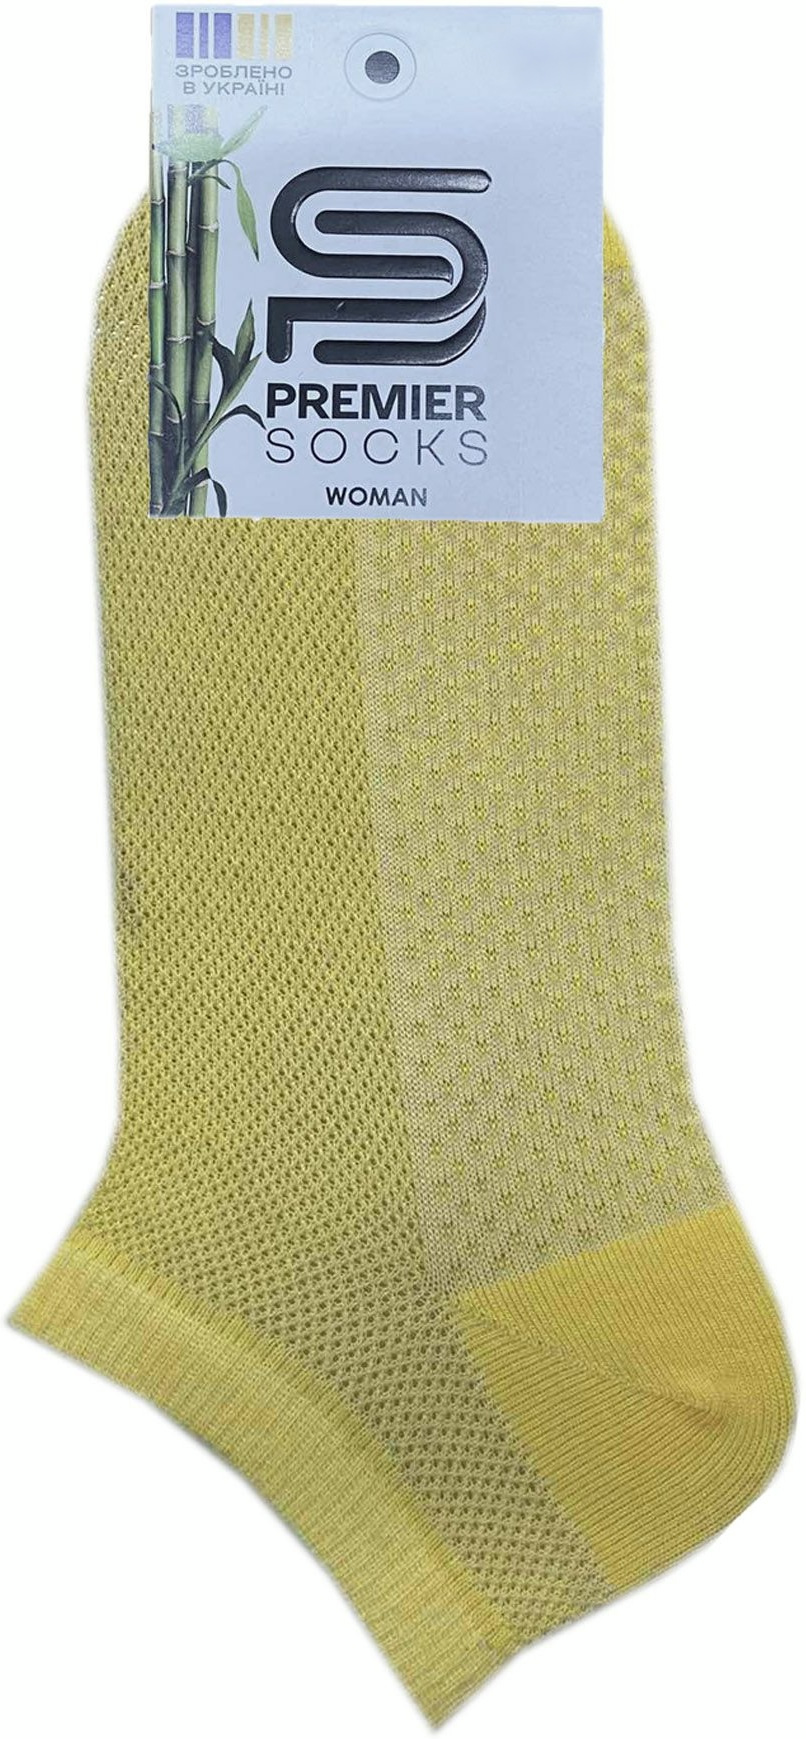 Носки женские Premier Socks 36-40 1 пара желтые (4820163318806)фото2